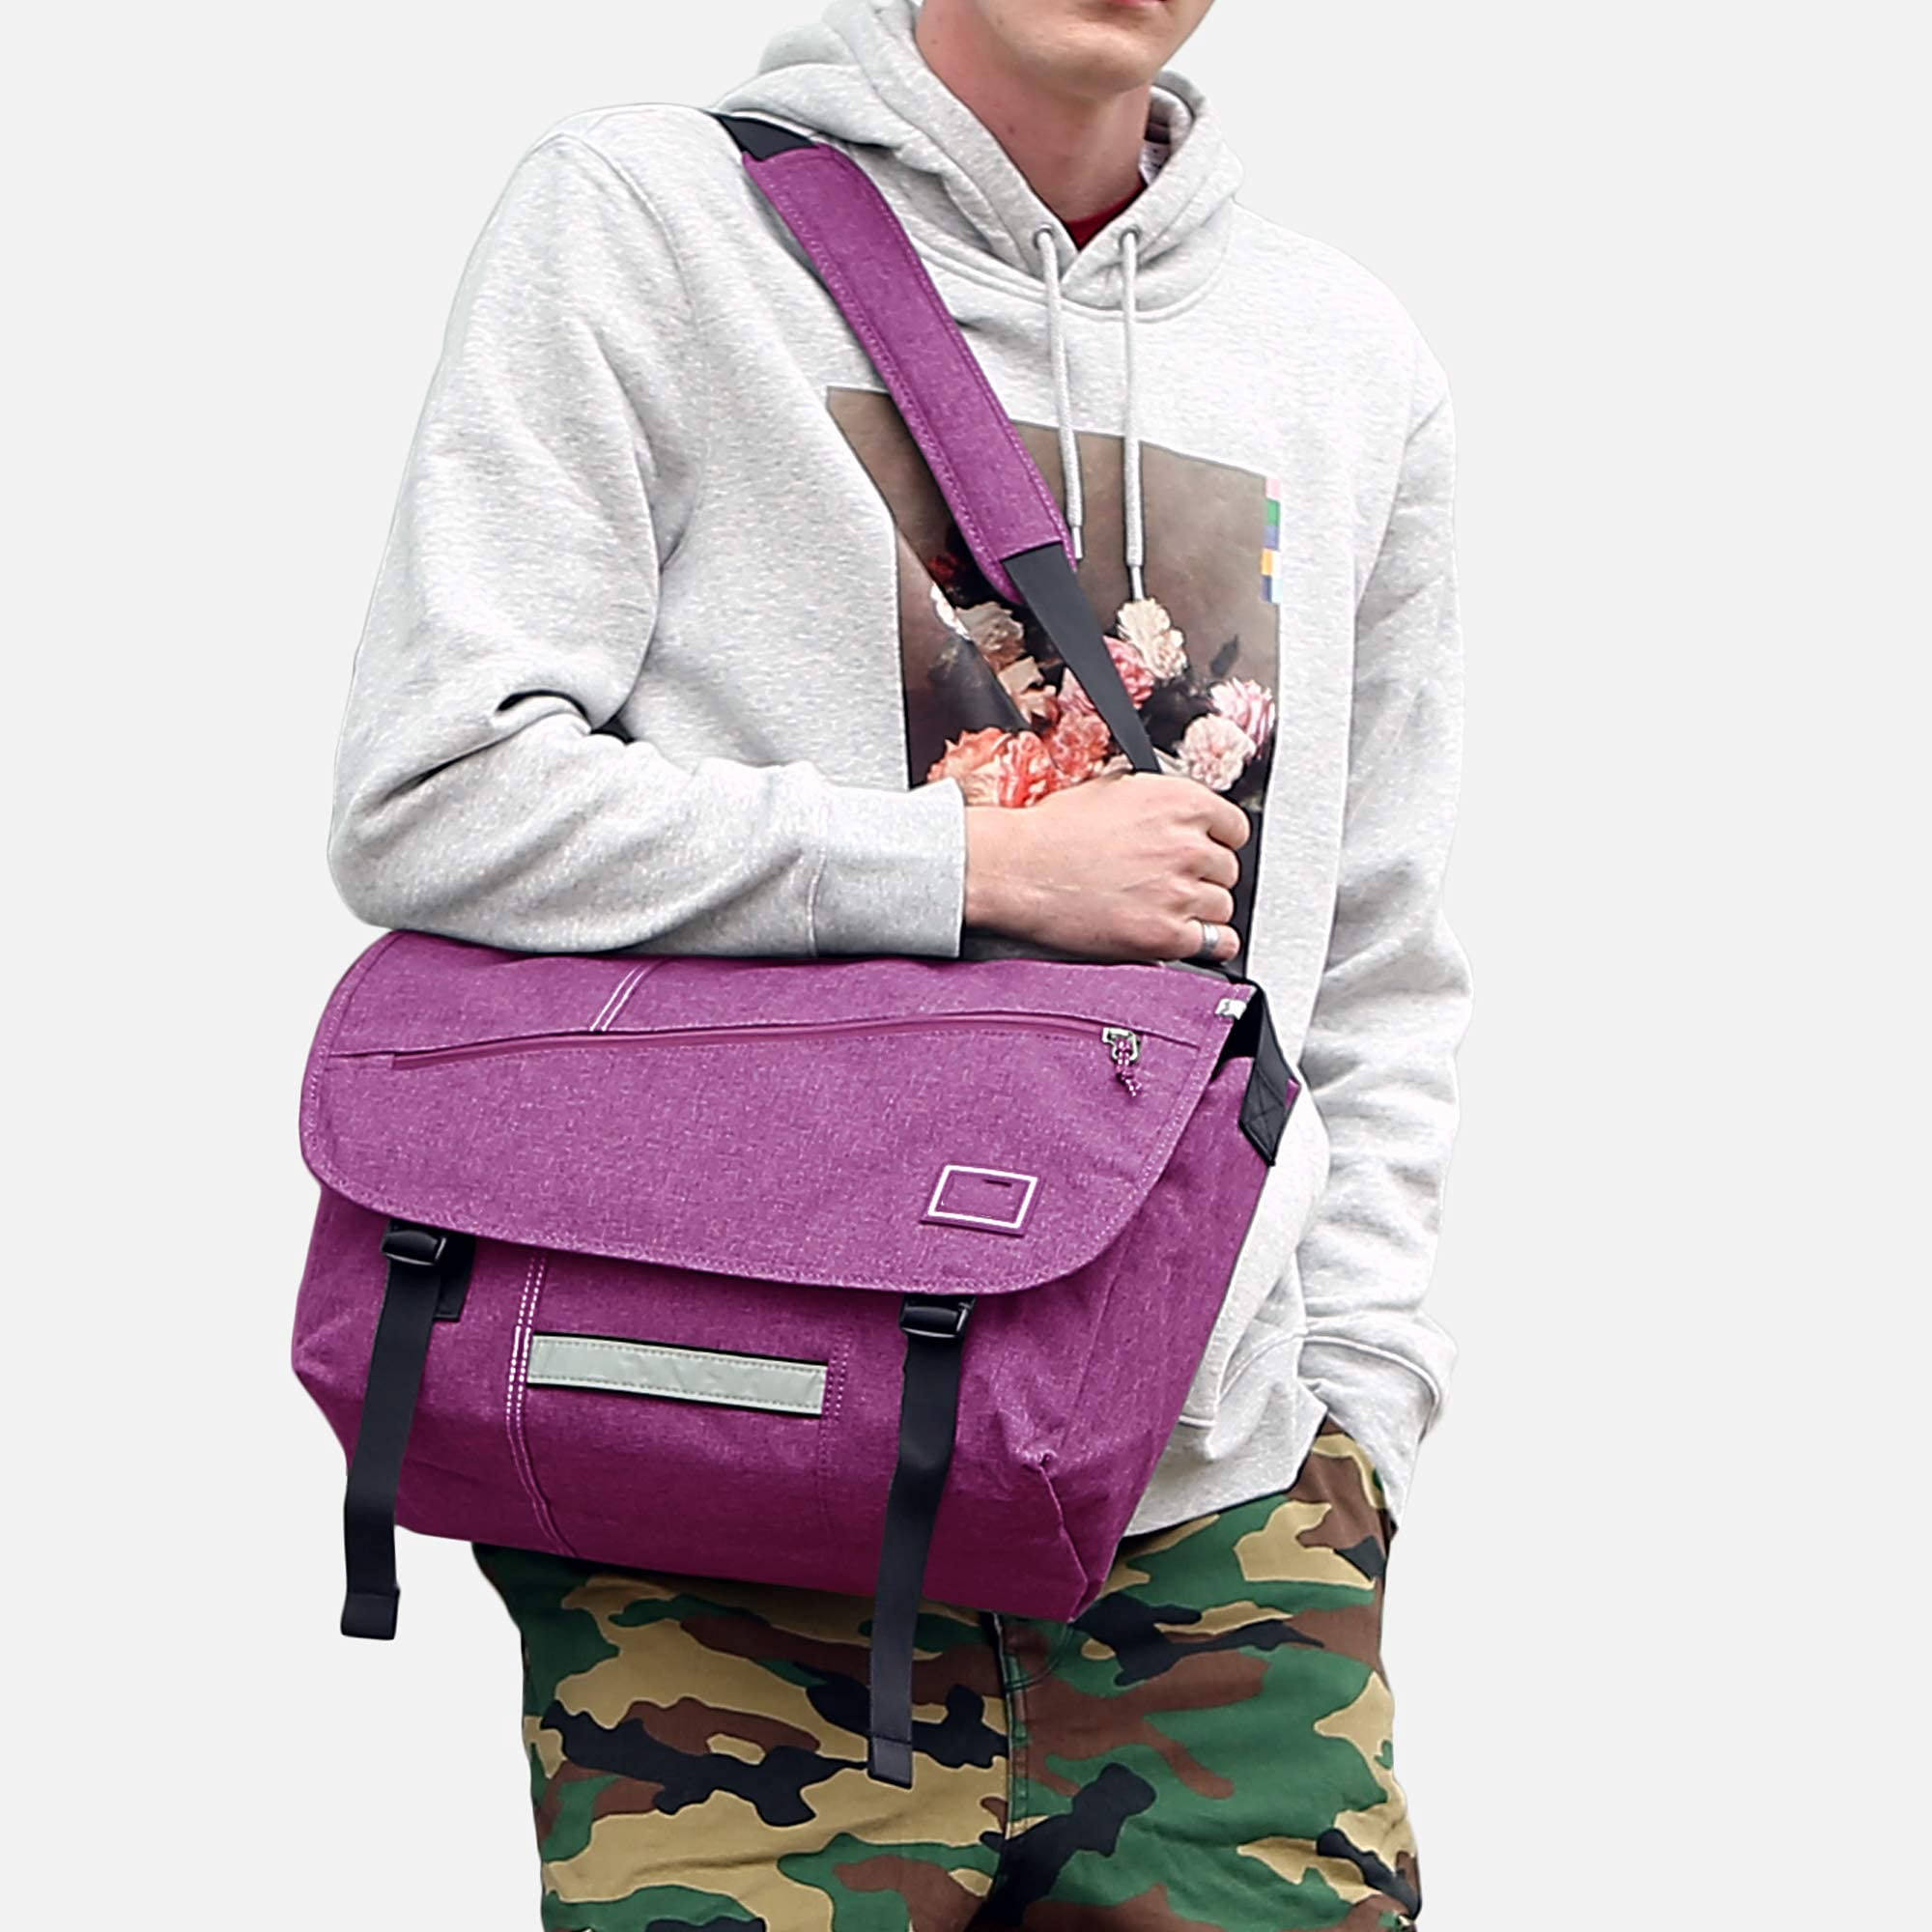 Custom Messenger Bag Women Men Satchel Bags Briefcase Crossbody Shoulder Bag 14 15.6 Inch Laptop School Work Travel